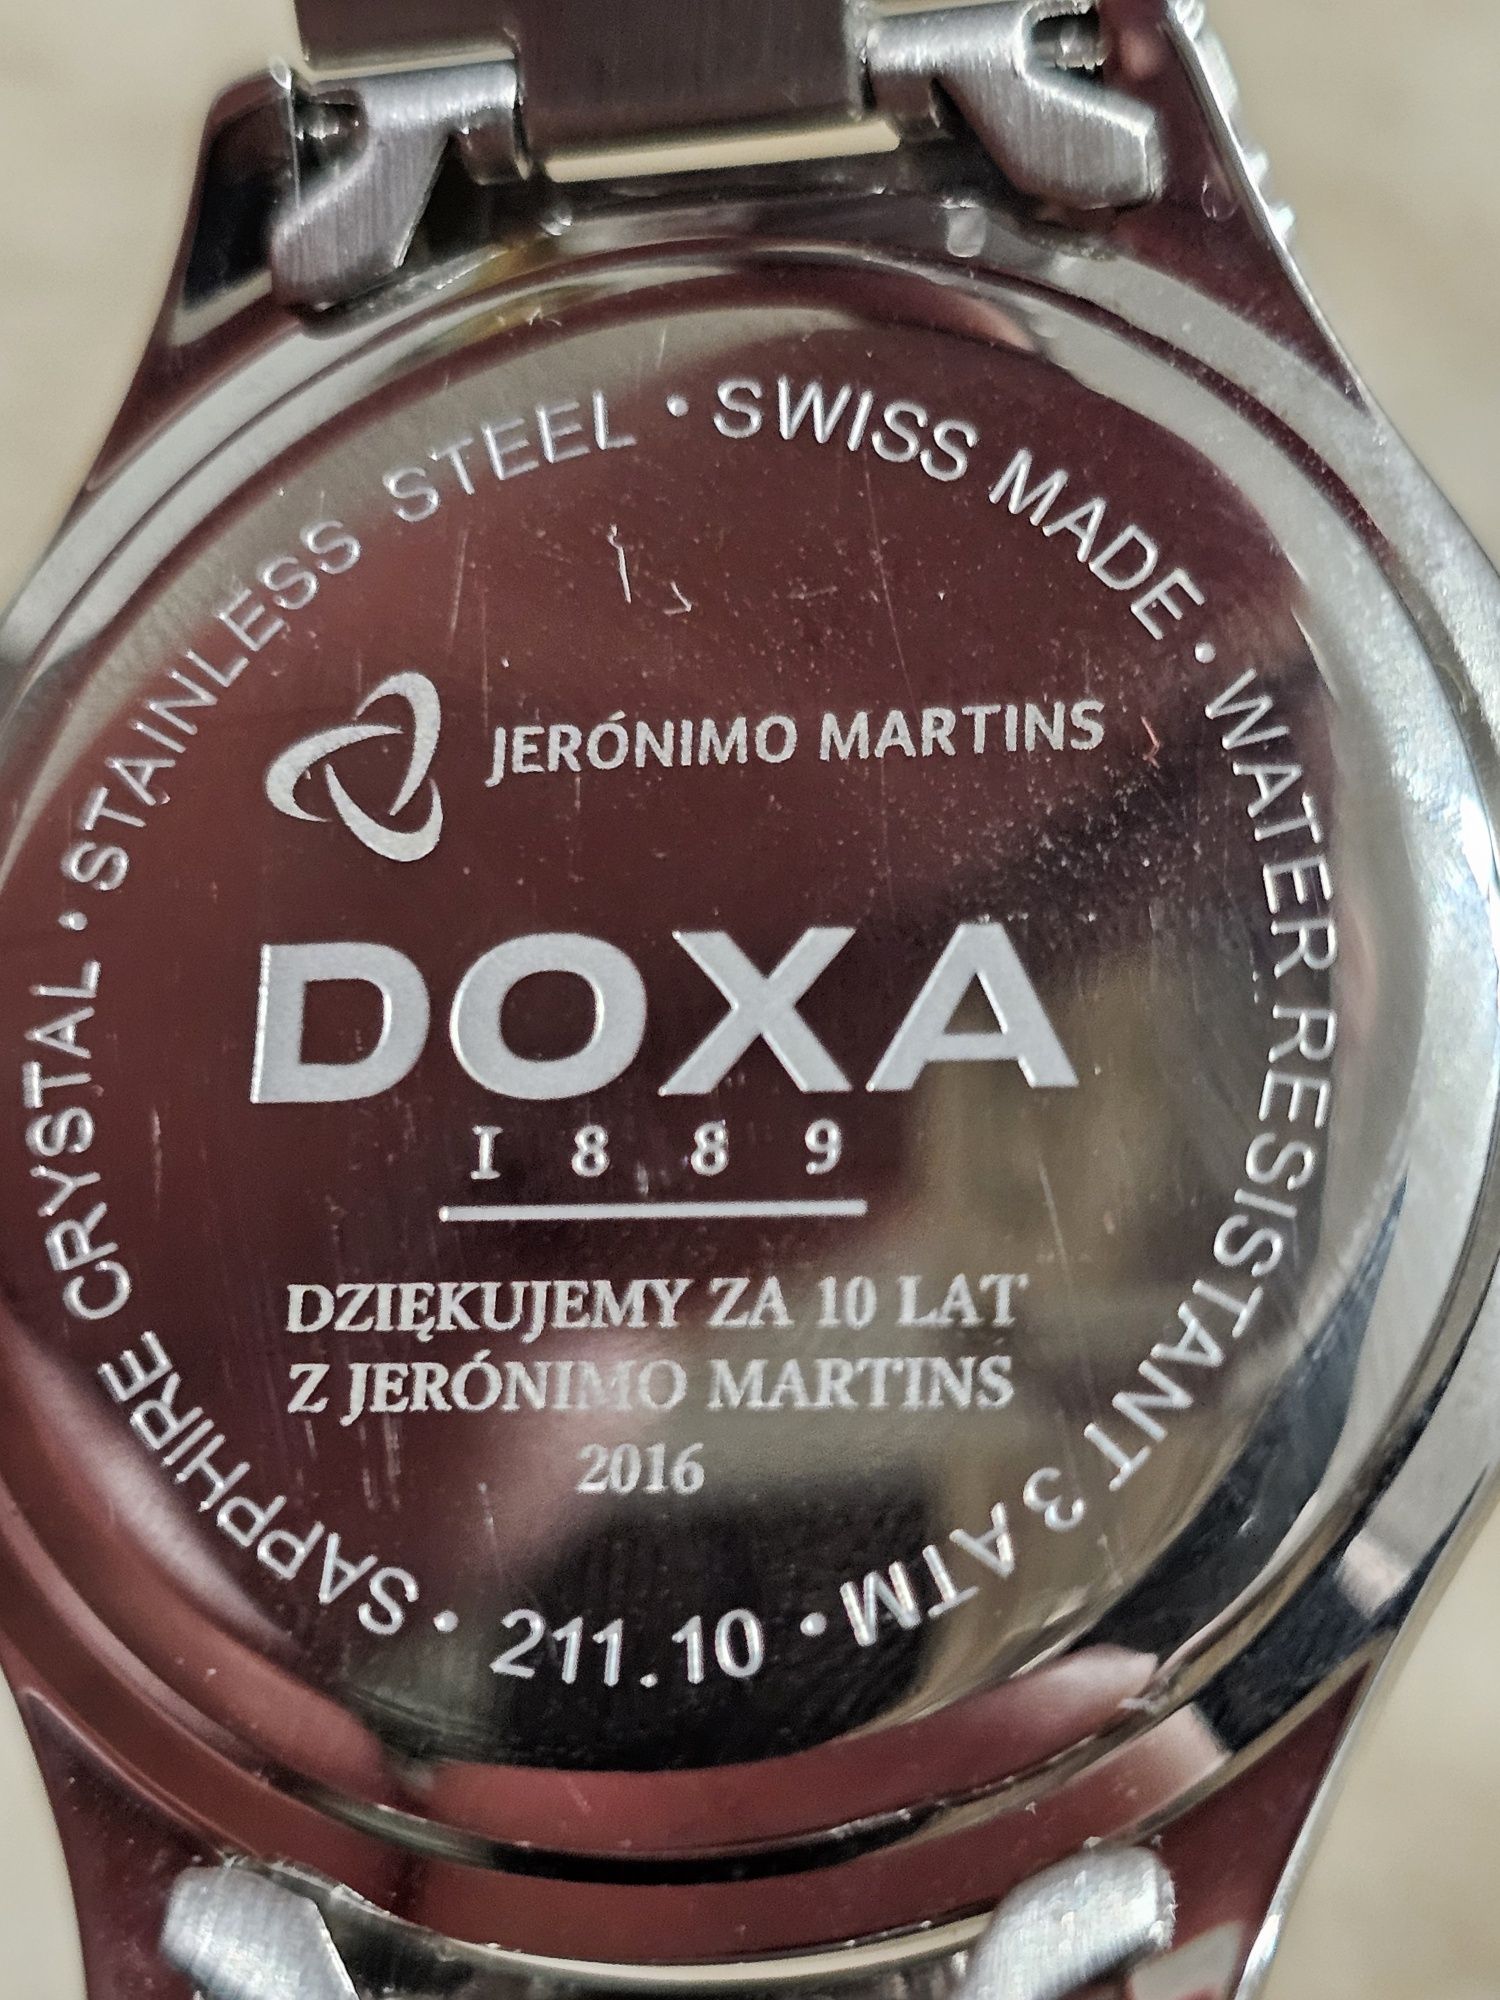 Zegarek Doxa nieużywany